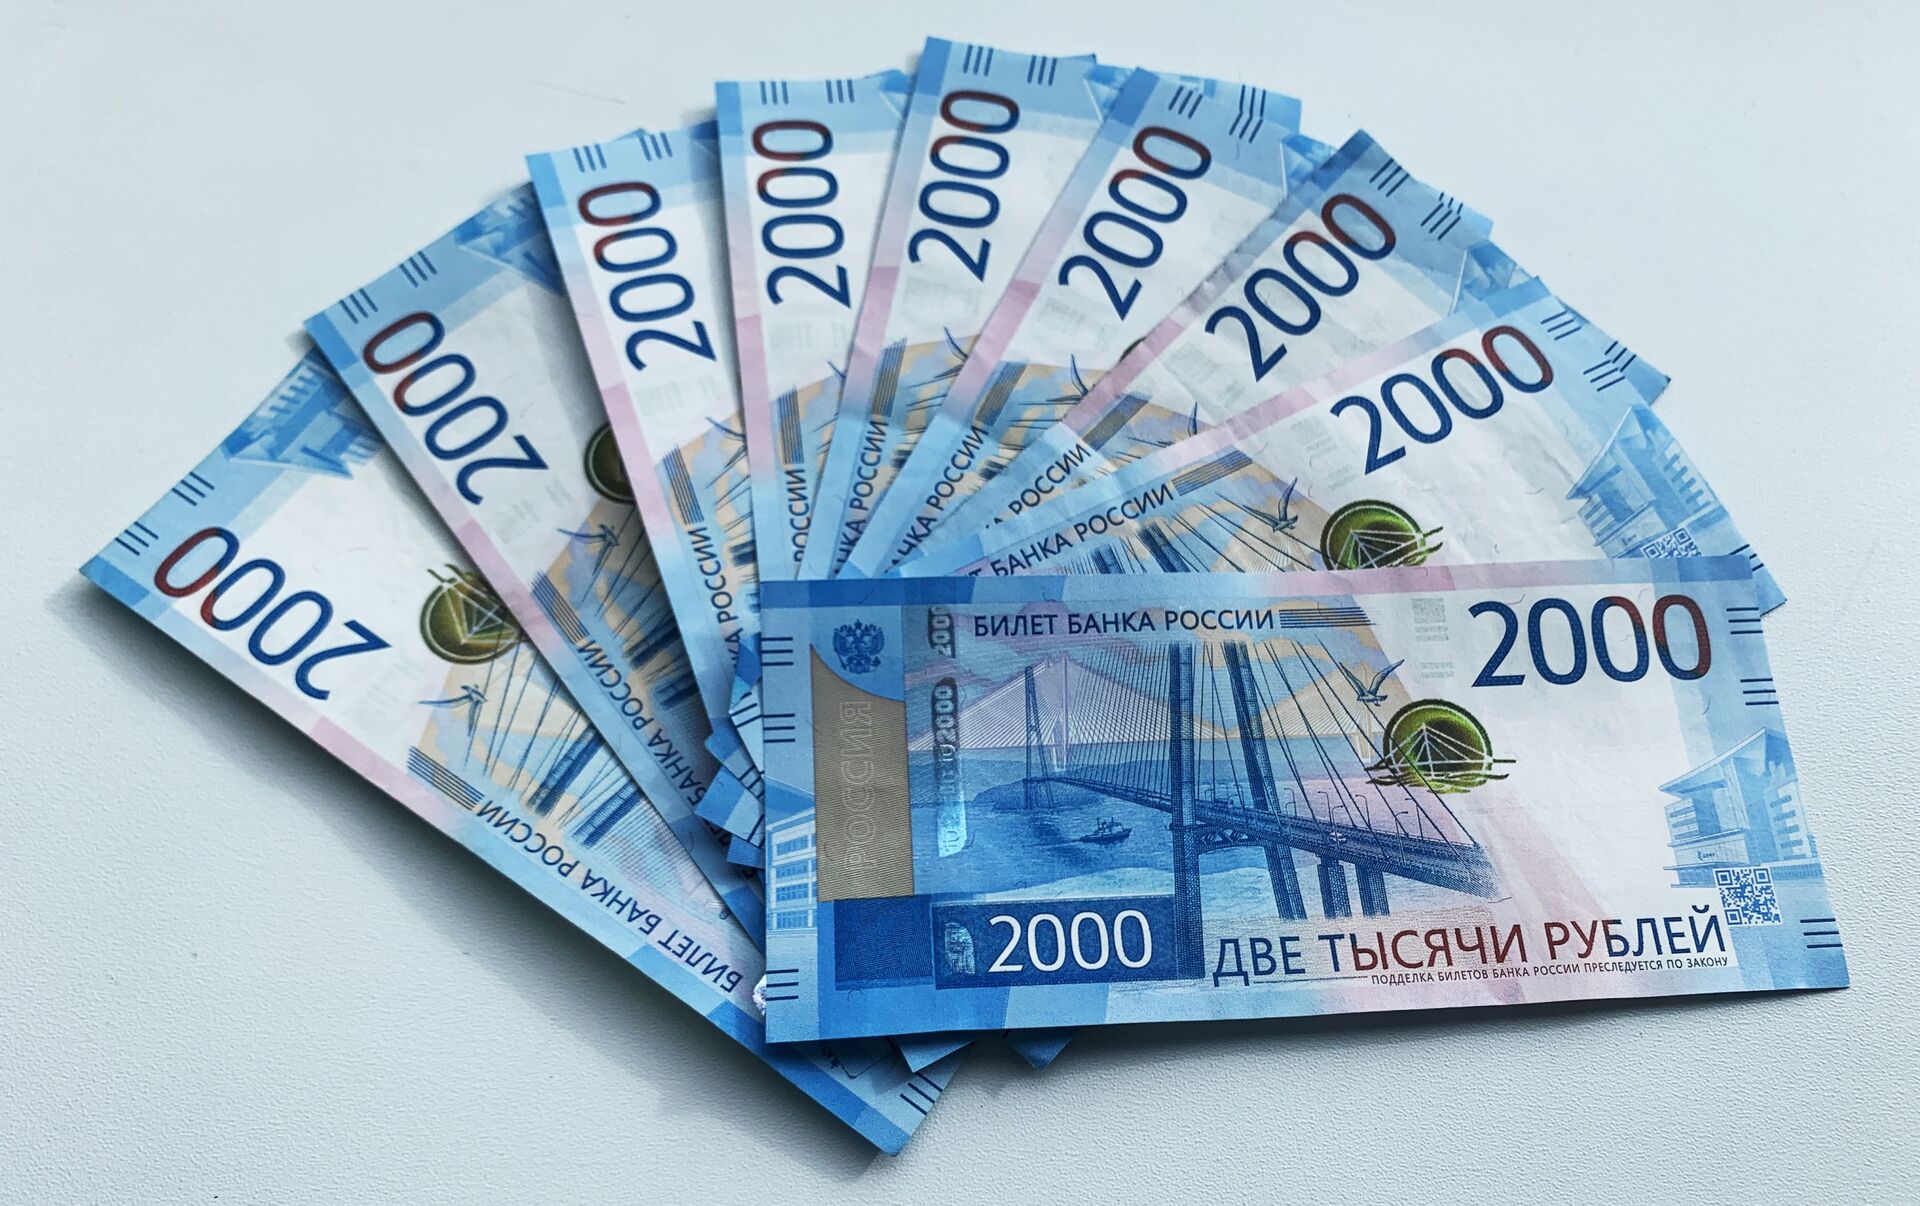 Тысяча евро в долларах. 2000 Евро деньги. 2000 Евро в рублях. Рубли. 2000 Евро банкнота.